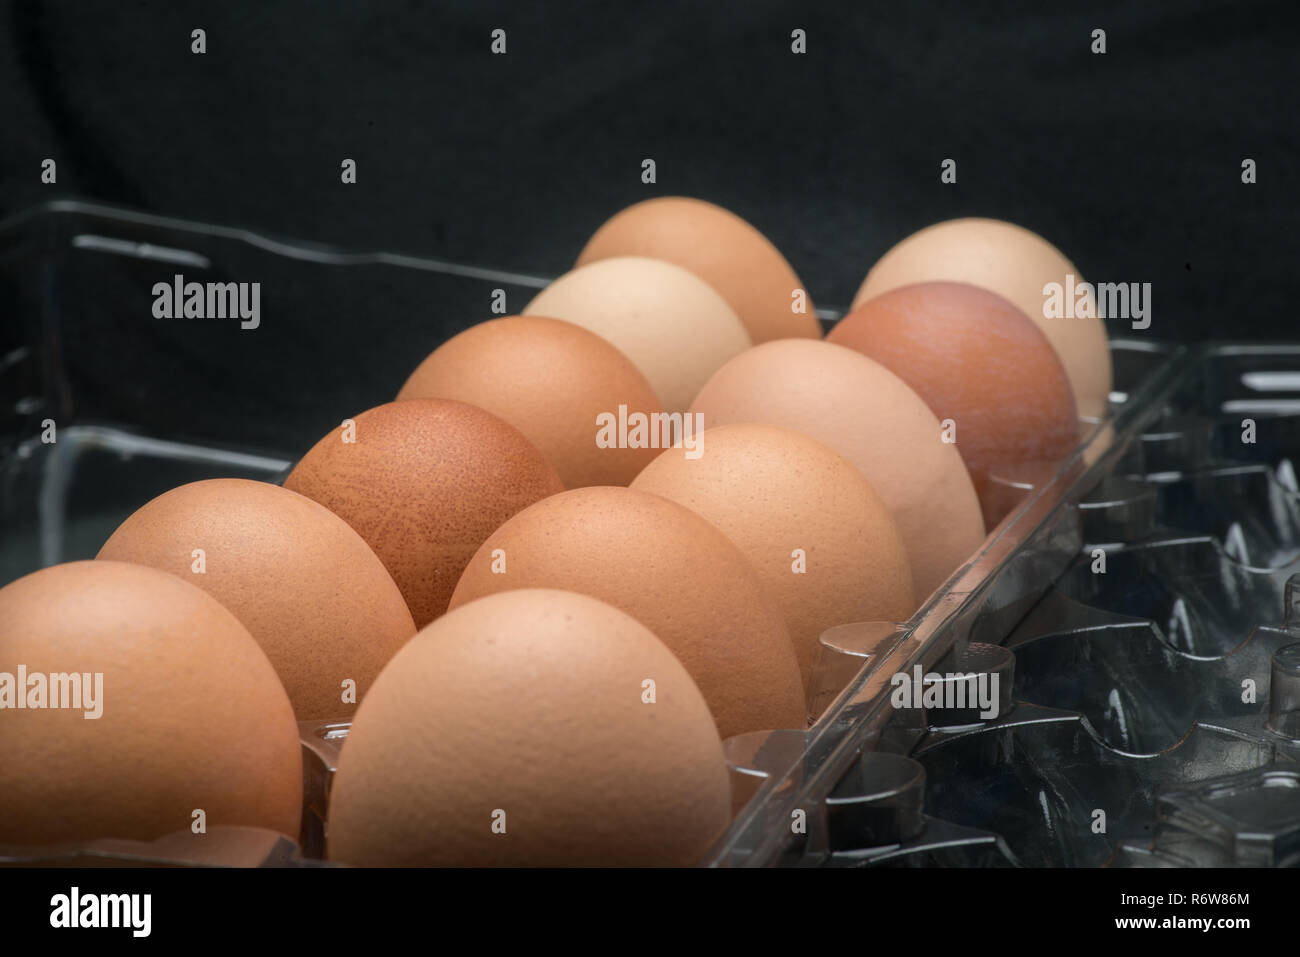 A plastic carton of fresh organic brown free range eggs Stock Photo